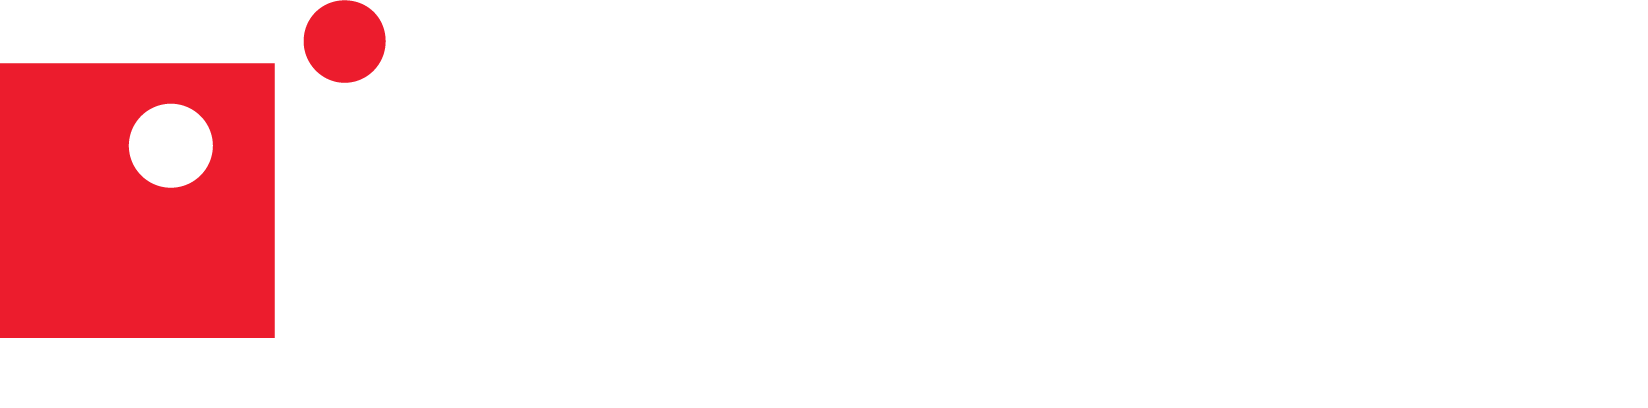 Impact Logo- White version